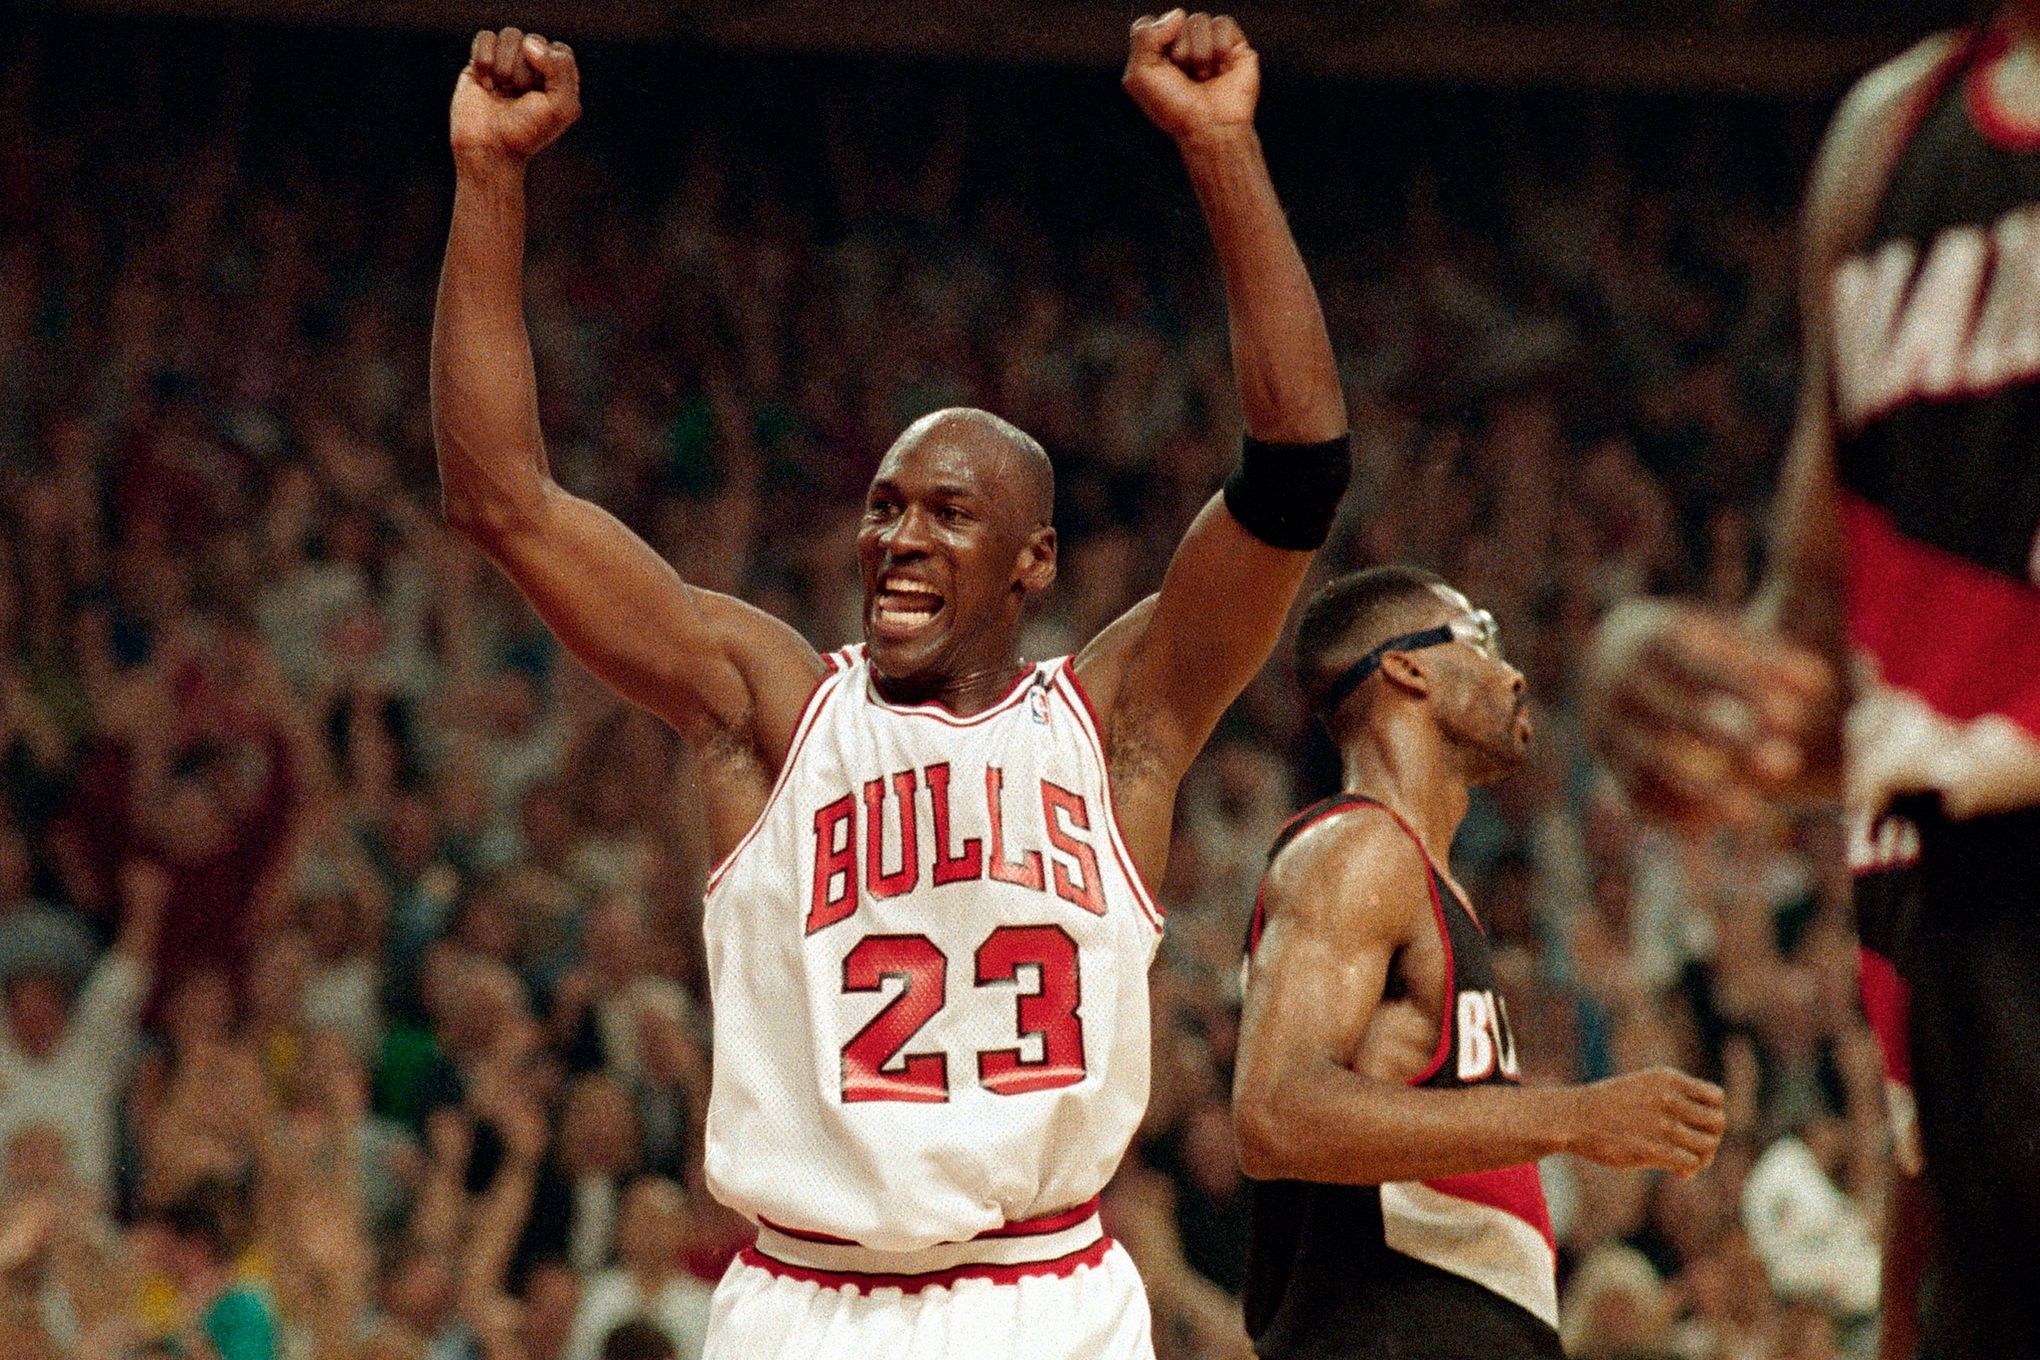 Top Moments: Bulls set NBA record with 72-win season